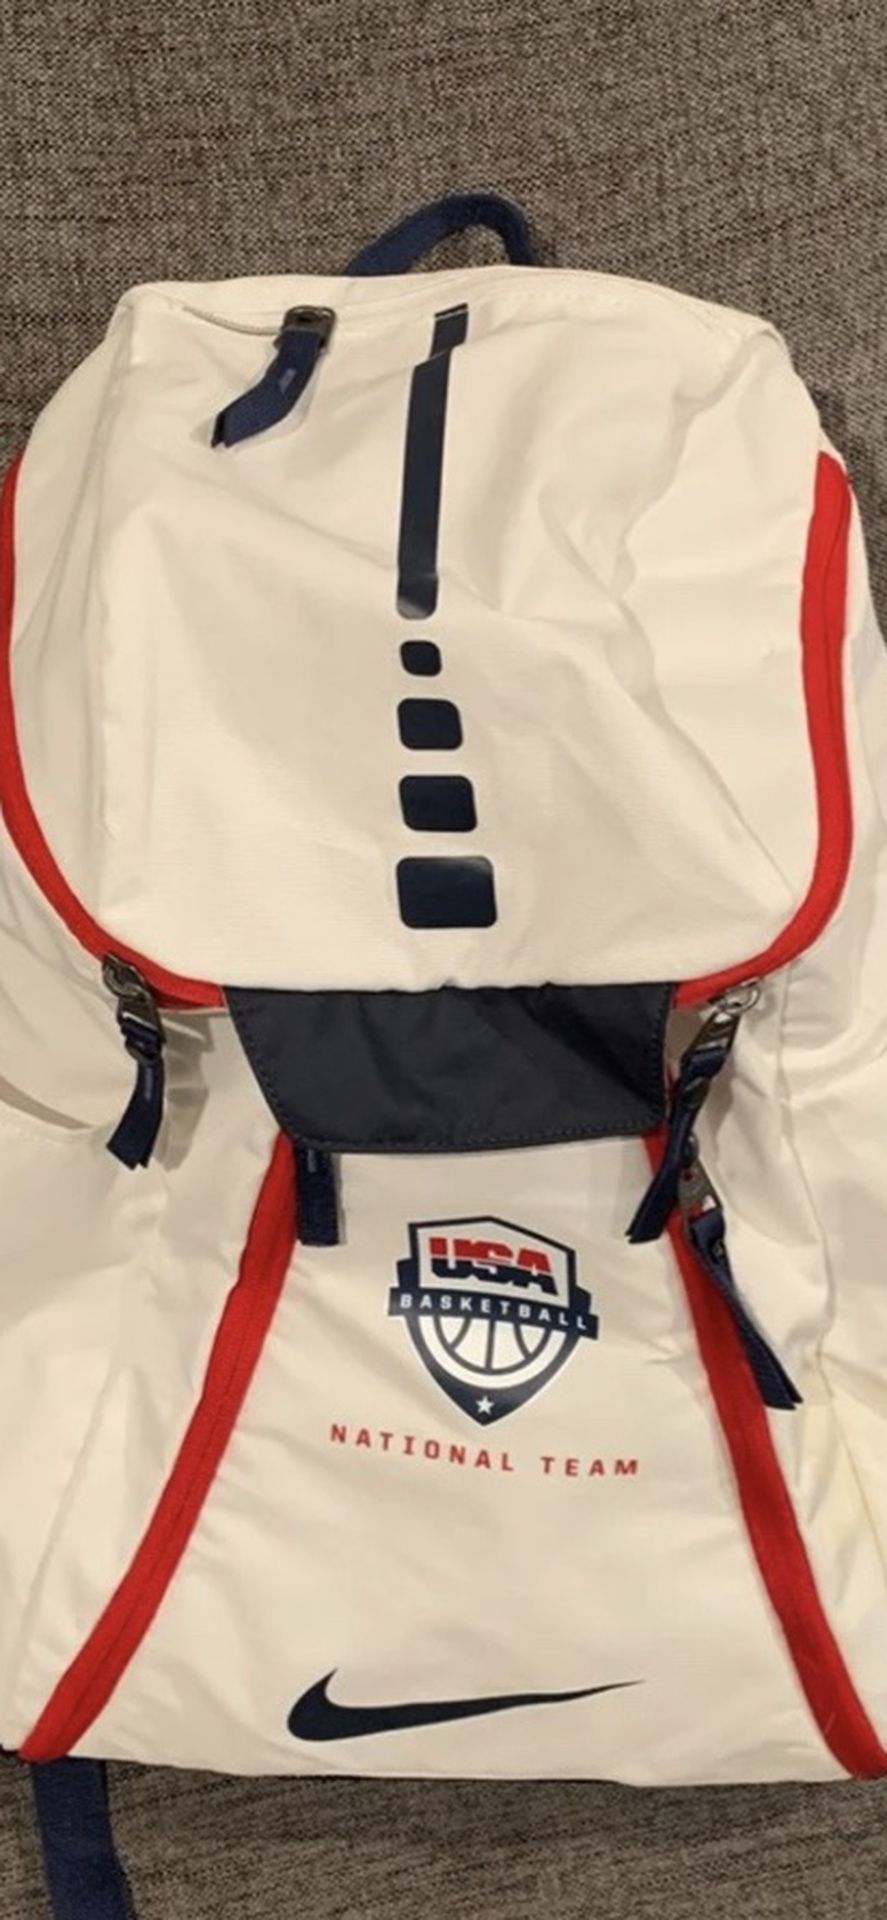 Nike USA Basketball National Team Backpack